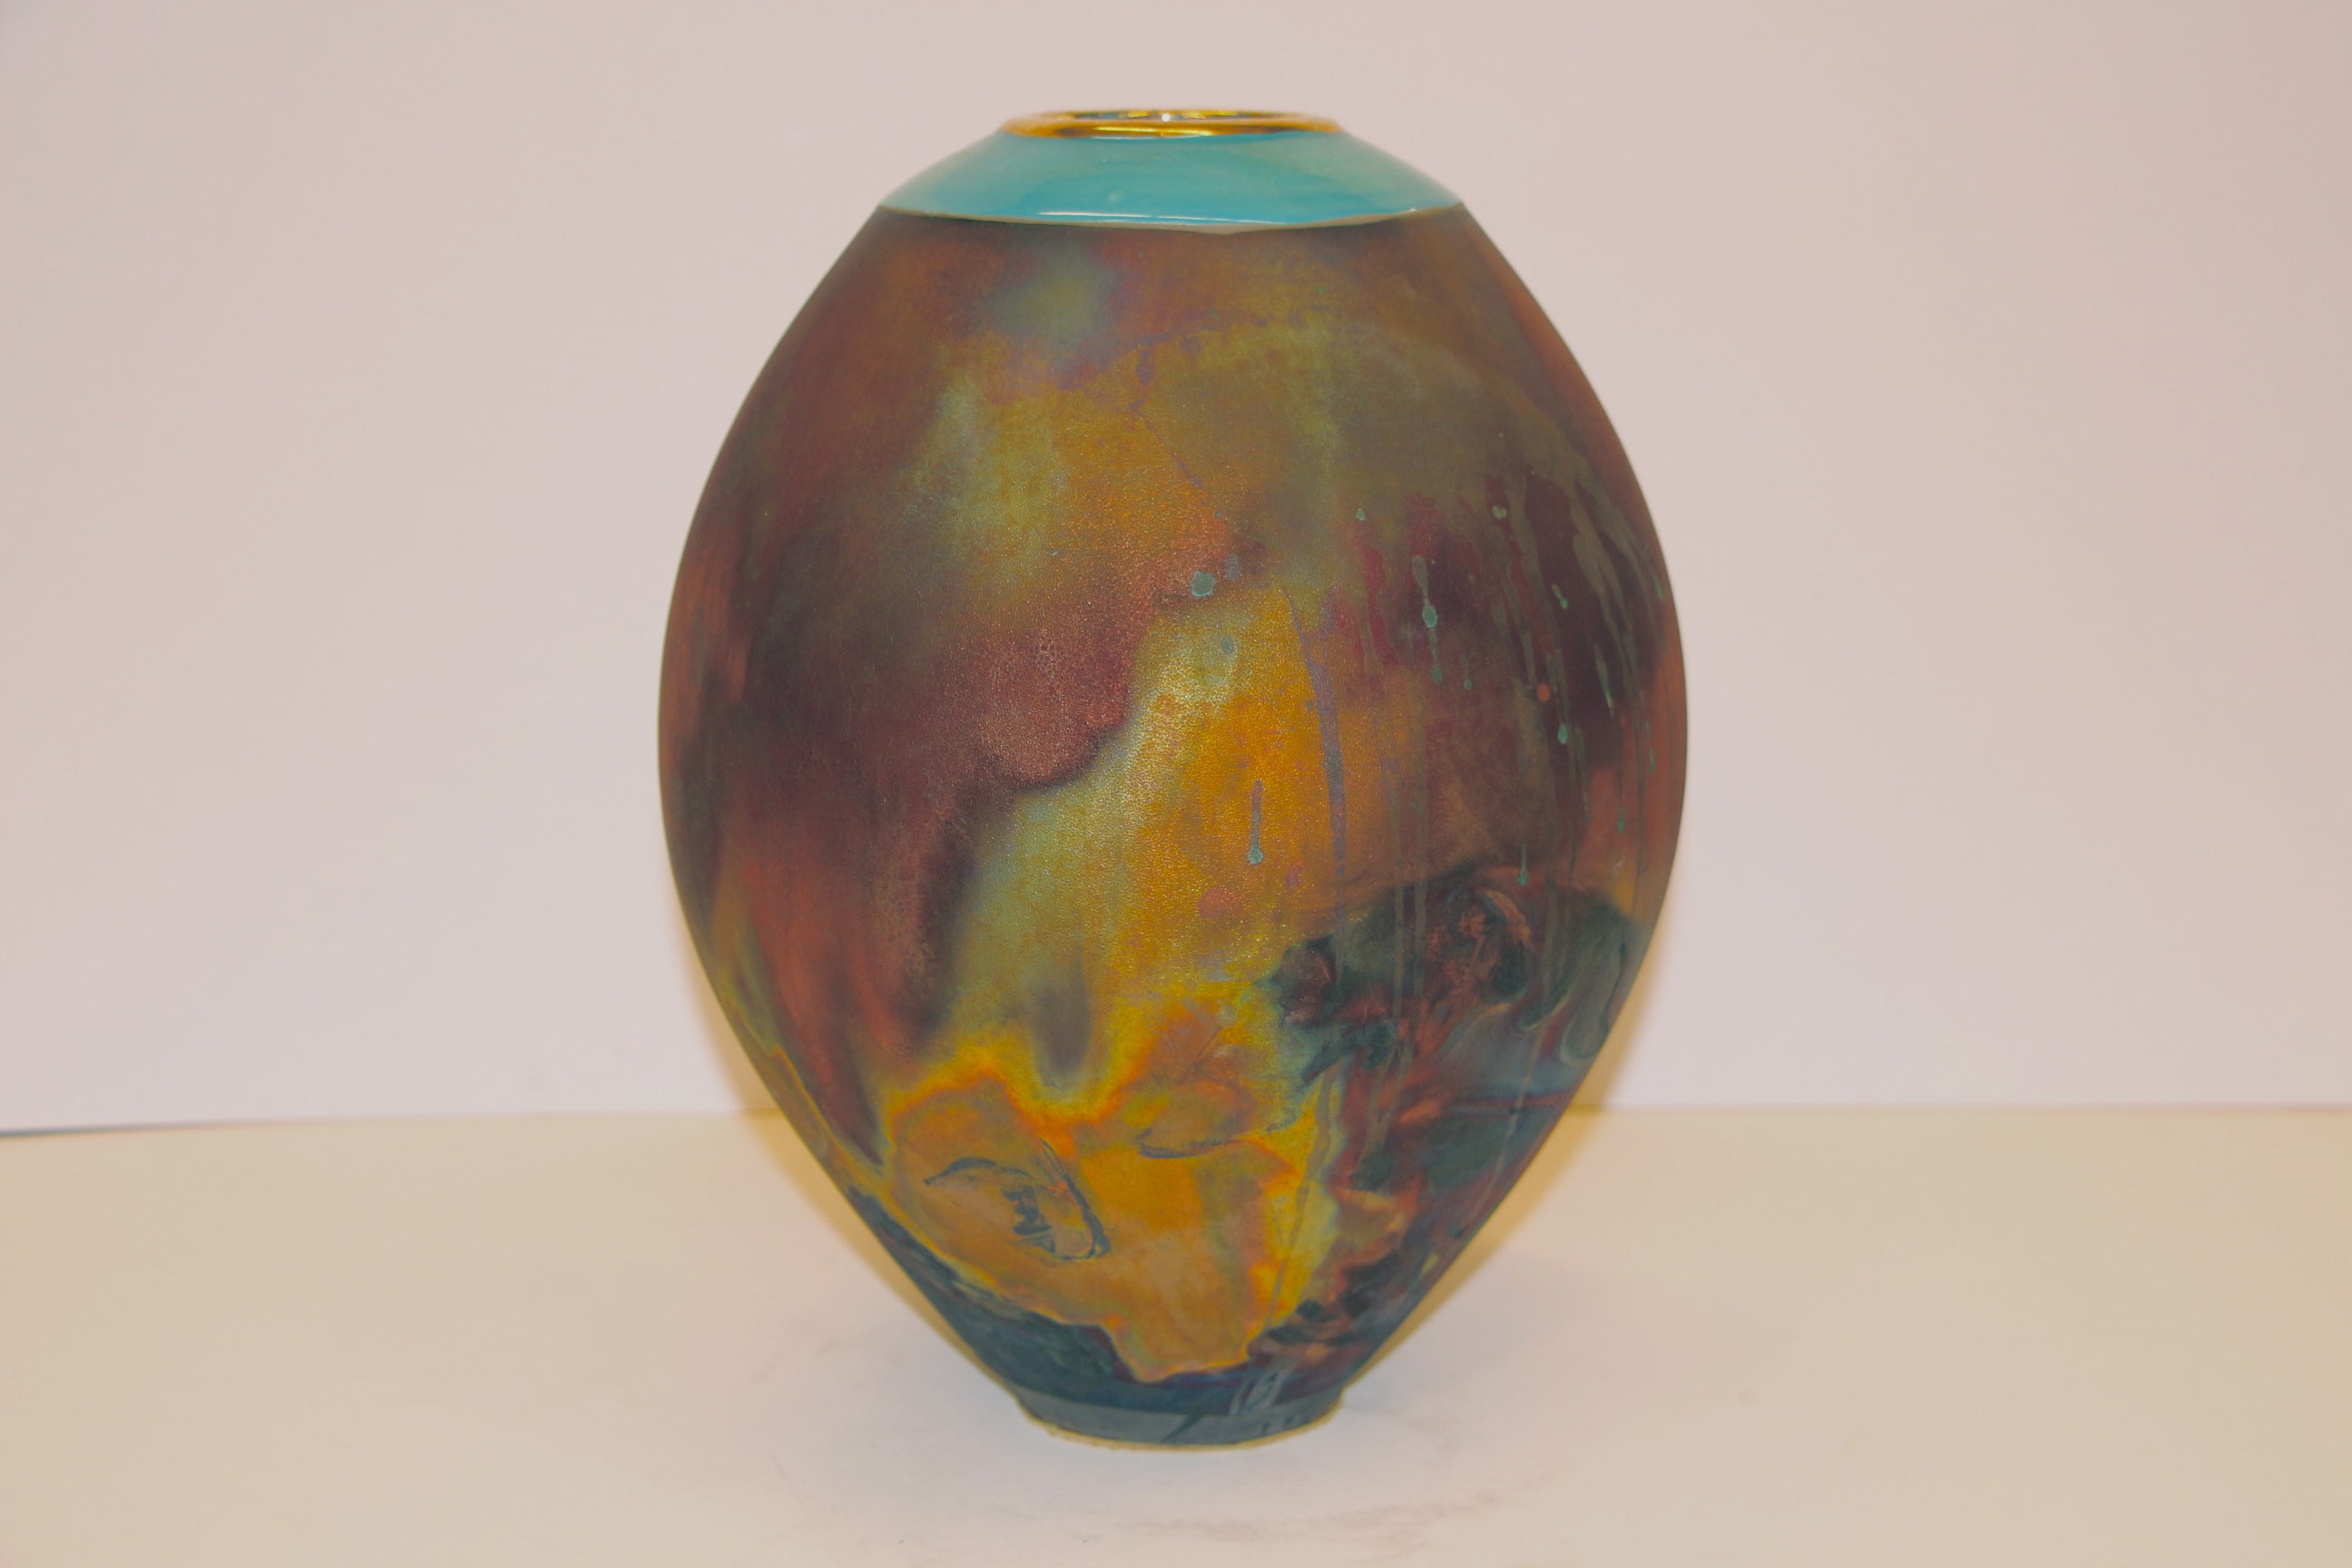 Beautiful raku fired vase